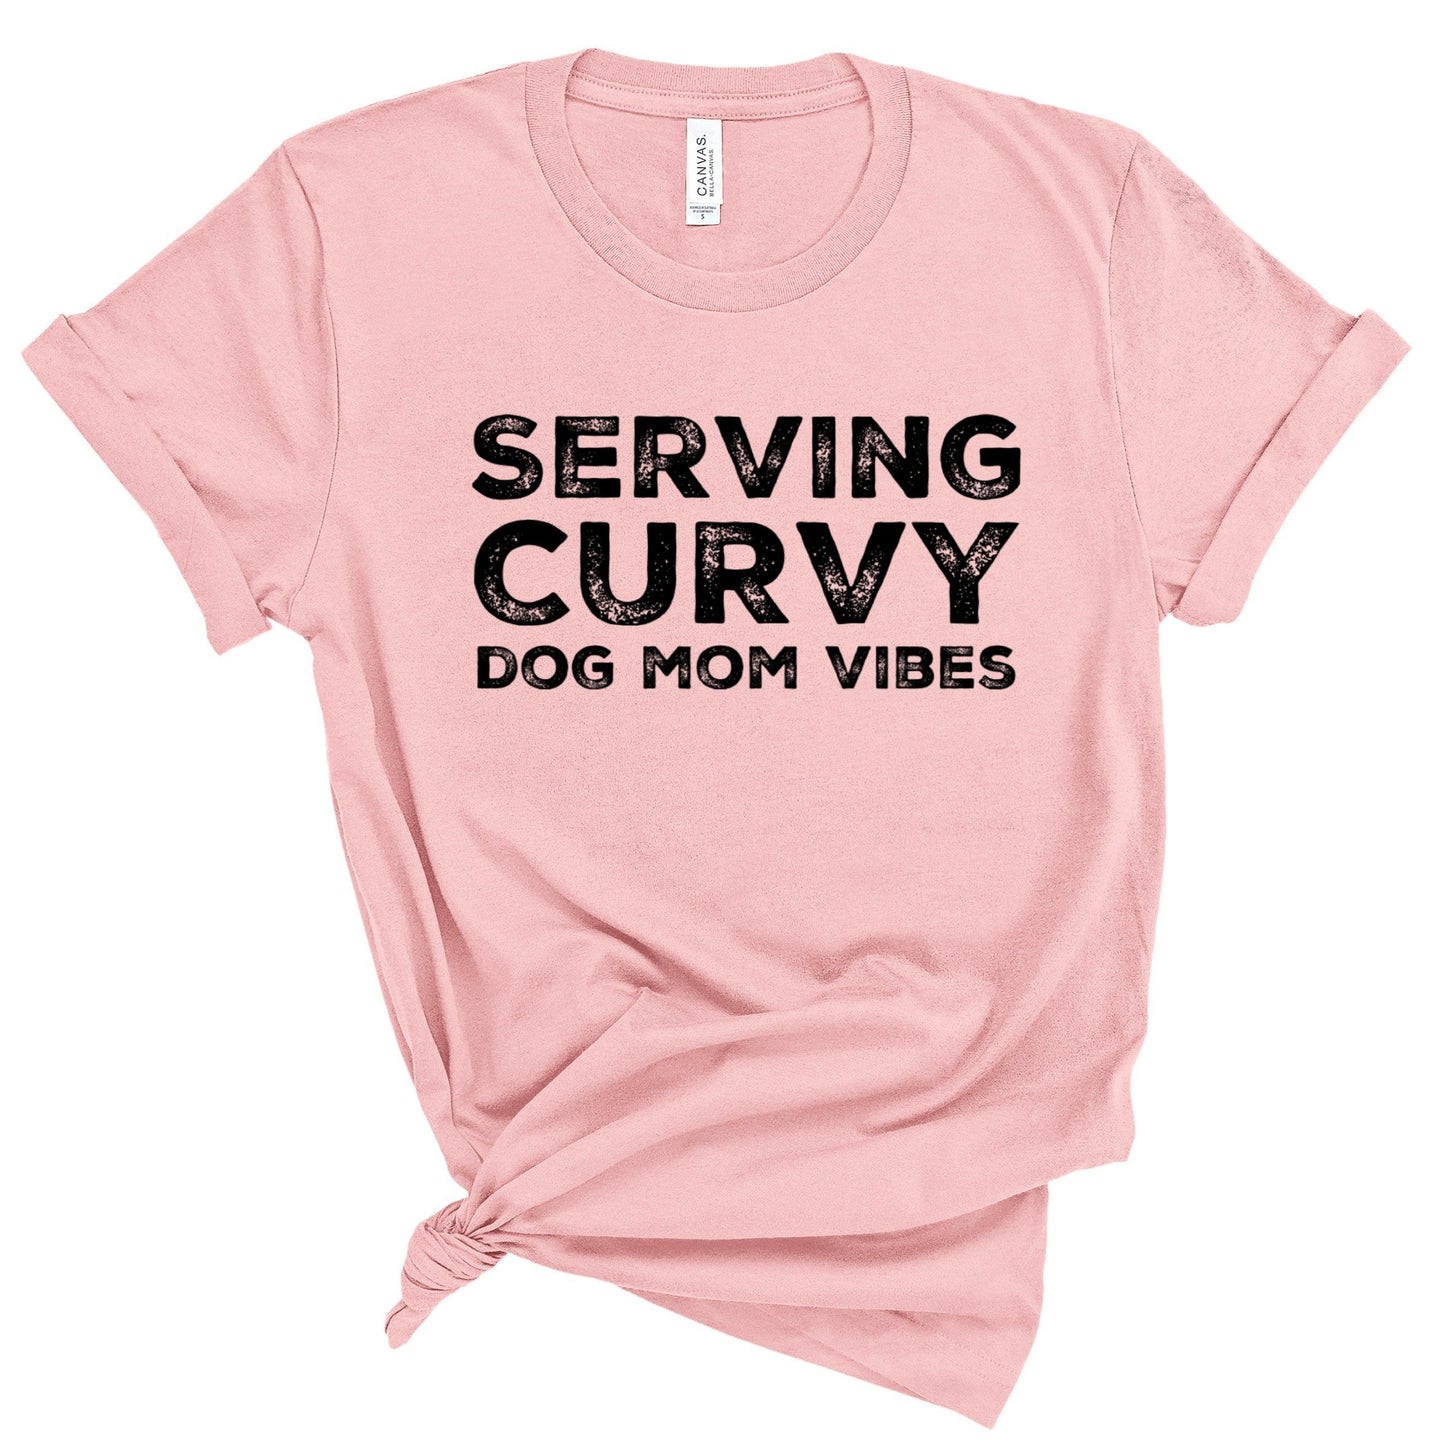 Serving Curvy Dog Mom Vibes